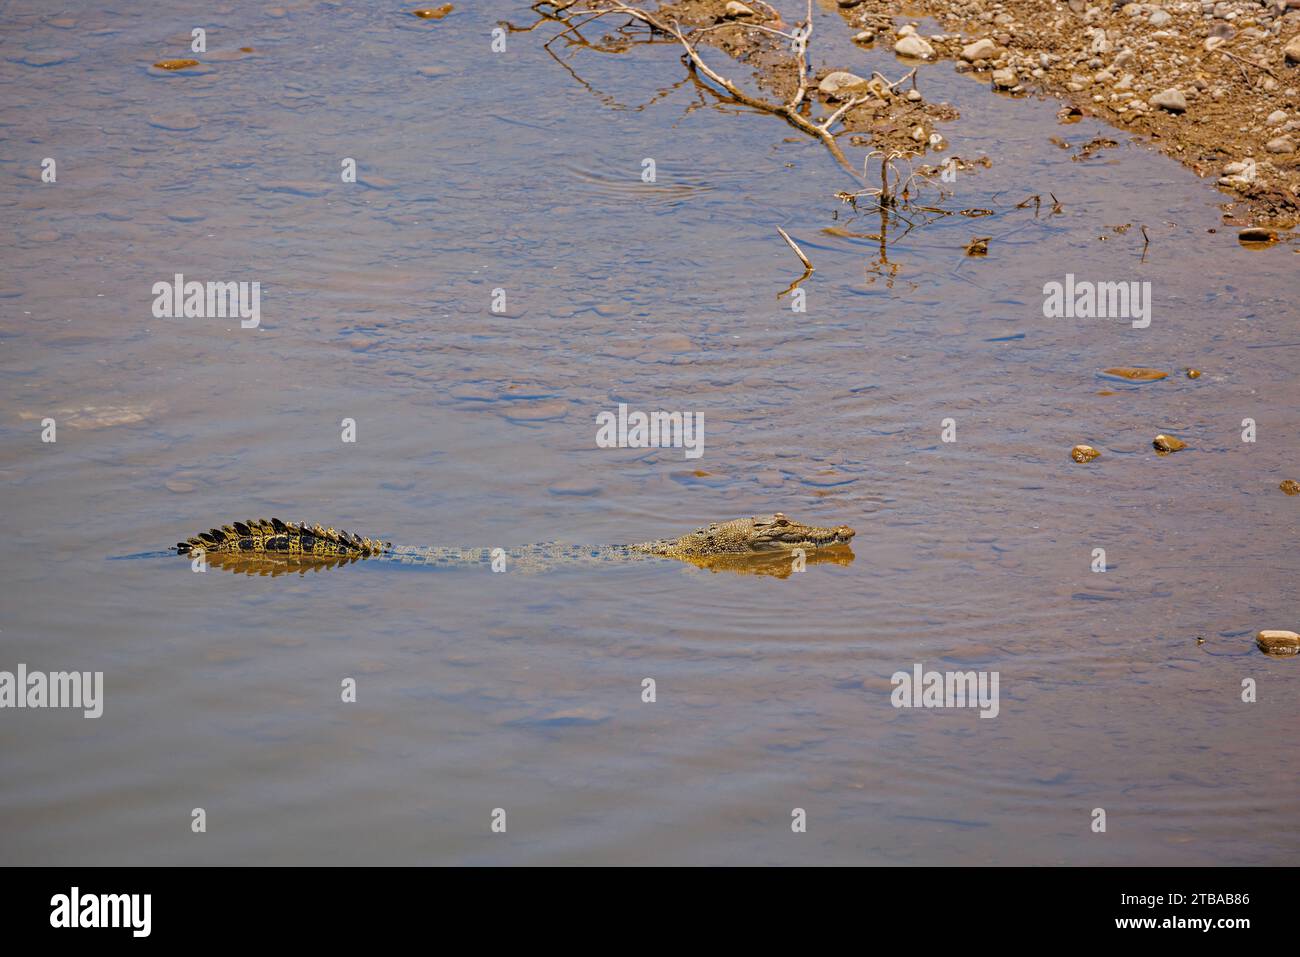 A salt water crocodile, Crocodylus porosus, in the Rib Maluilada River, The Democratic Republic of Timor-Leste. Stock Photo